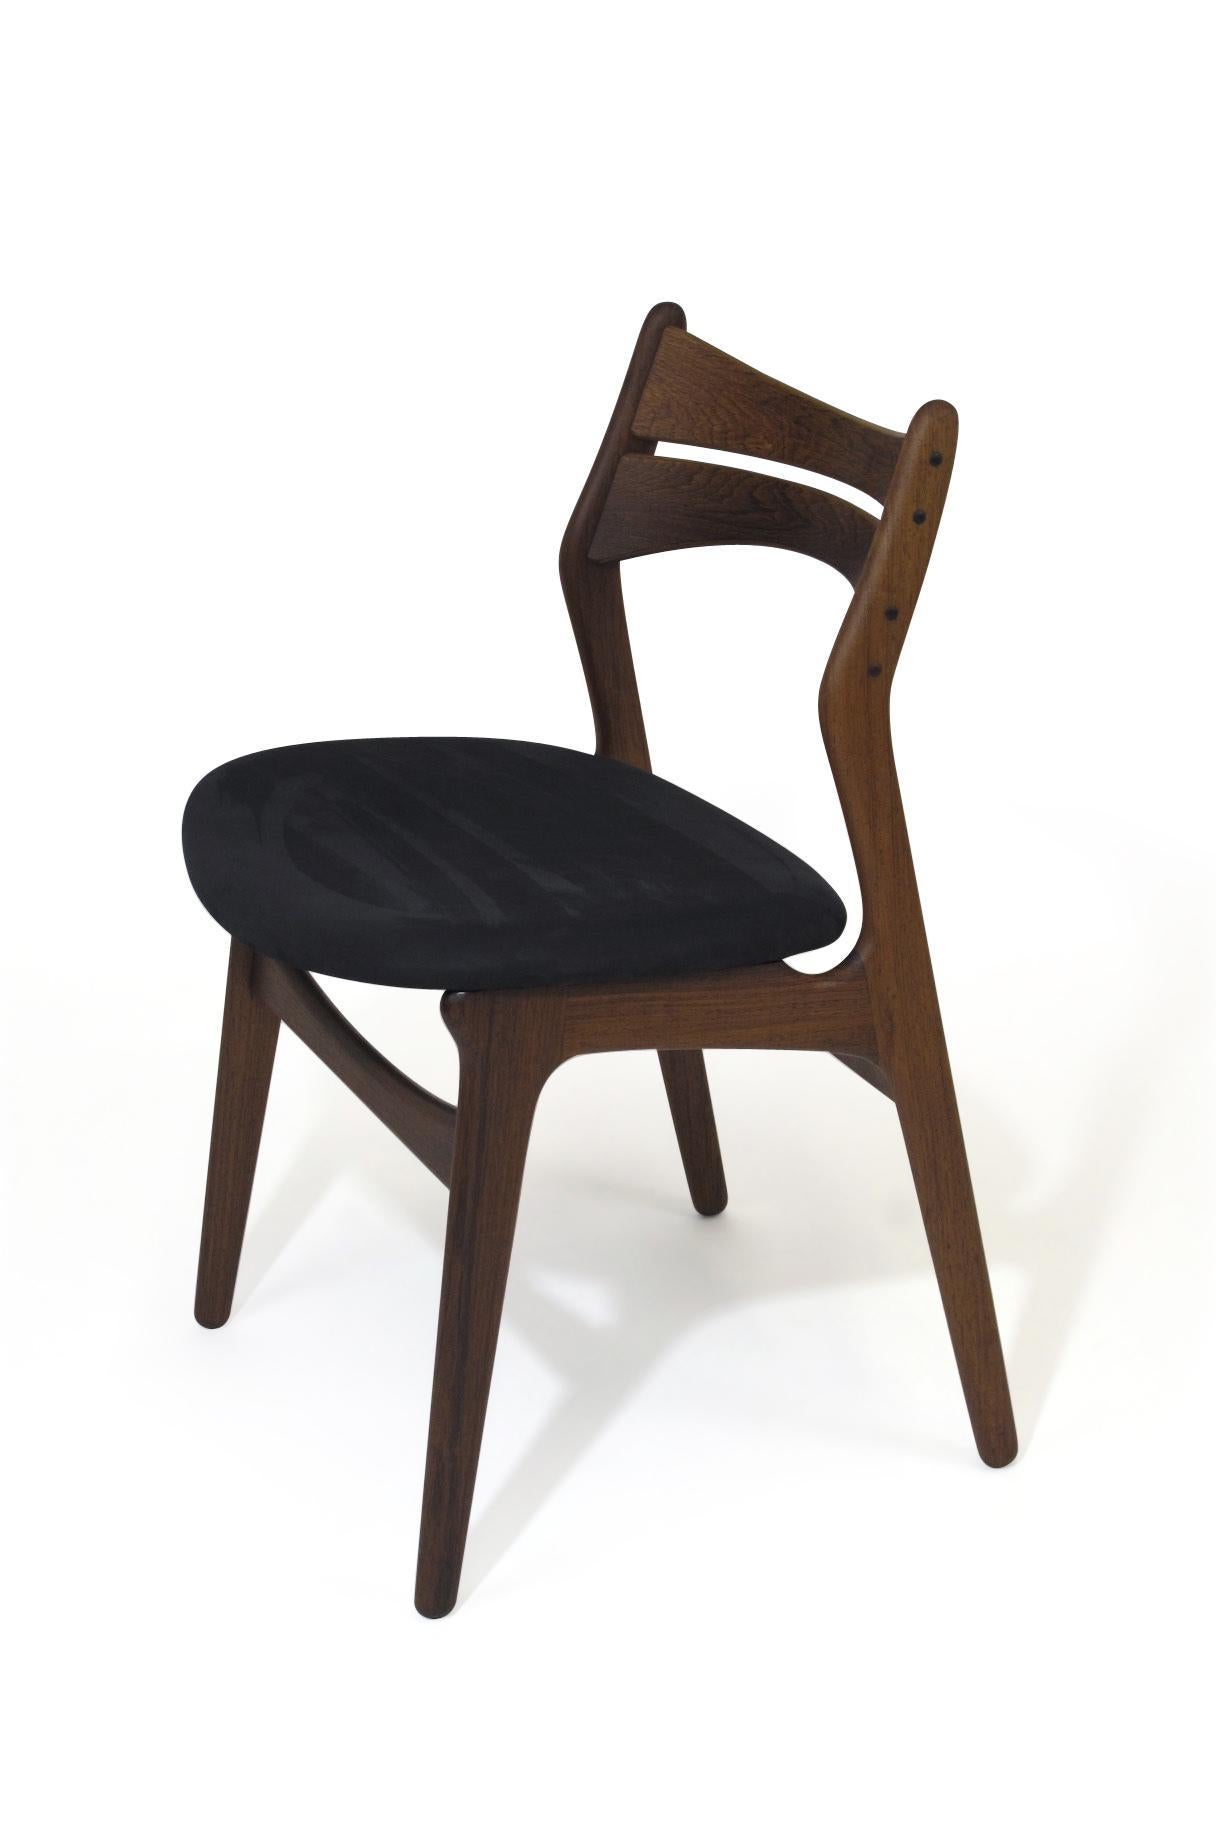 Danish Erik Buch Rosewood Dining Chairs, Set of 6